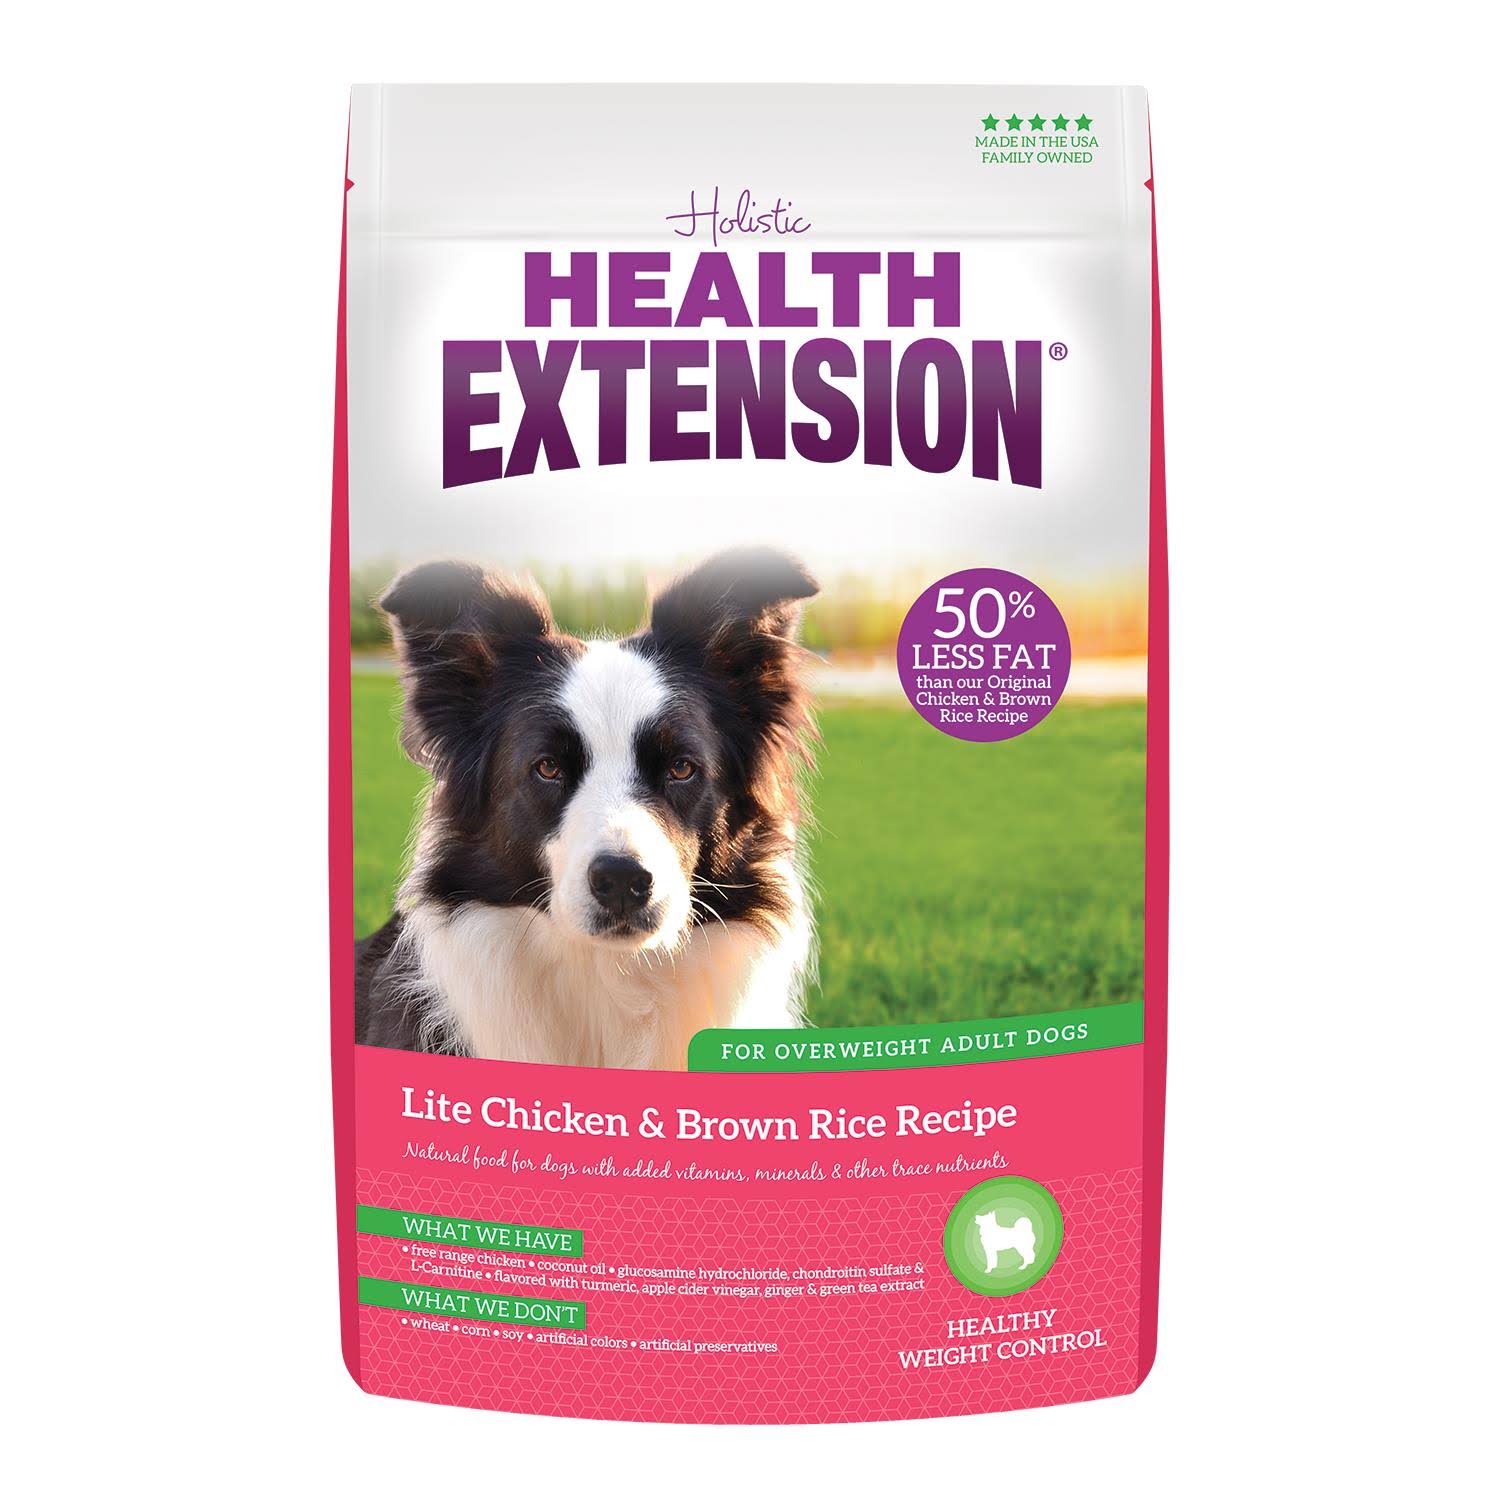 Health Extension - Eliminate Extra Strengt - 0.5 Gallon (64 fl. oz.)